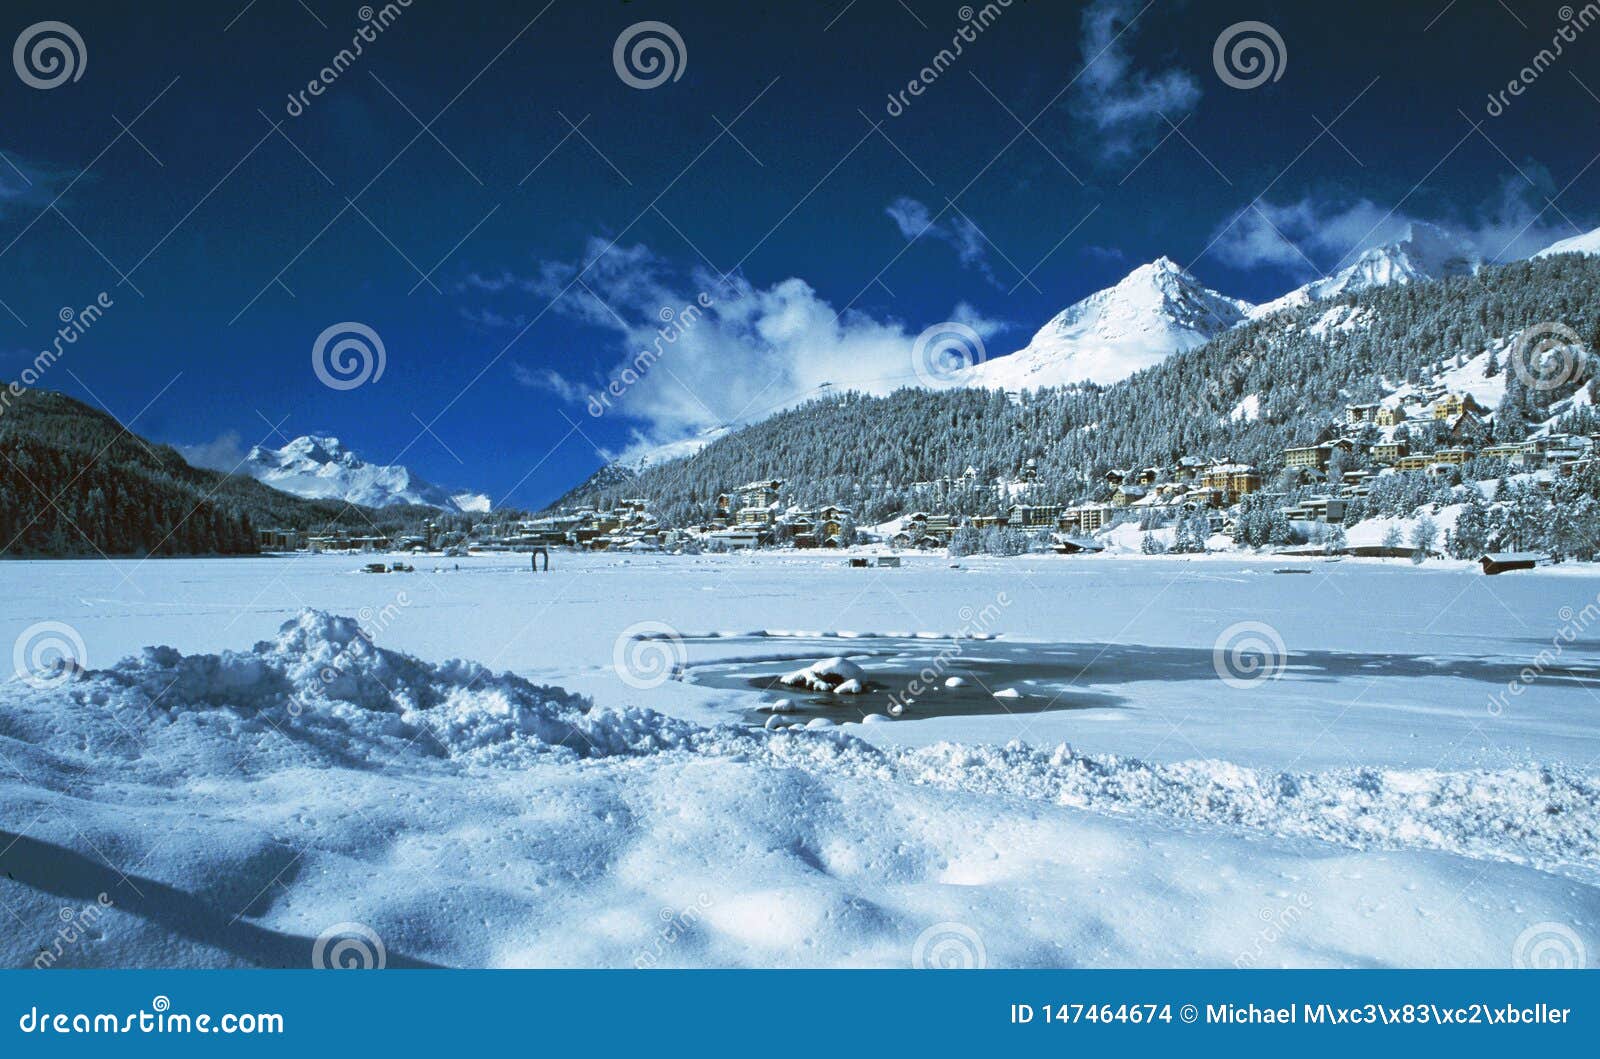 frozen lake st. moritz, wintersport village, upper engadin